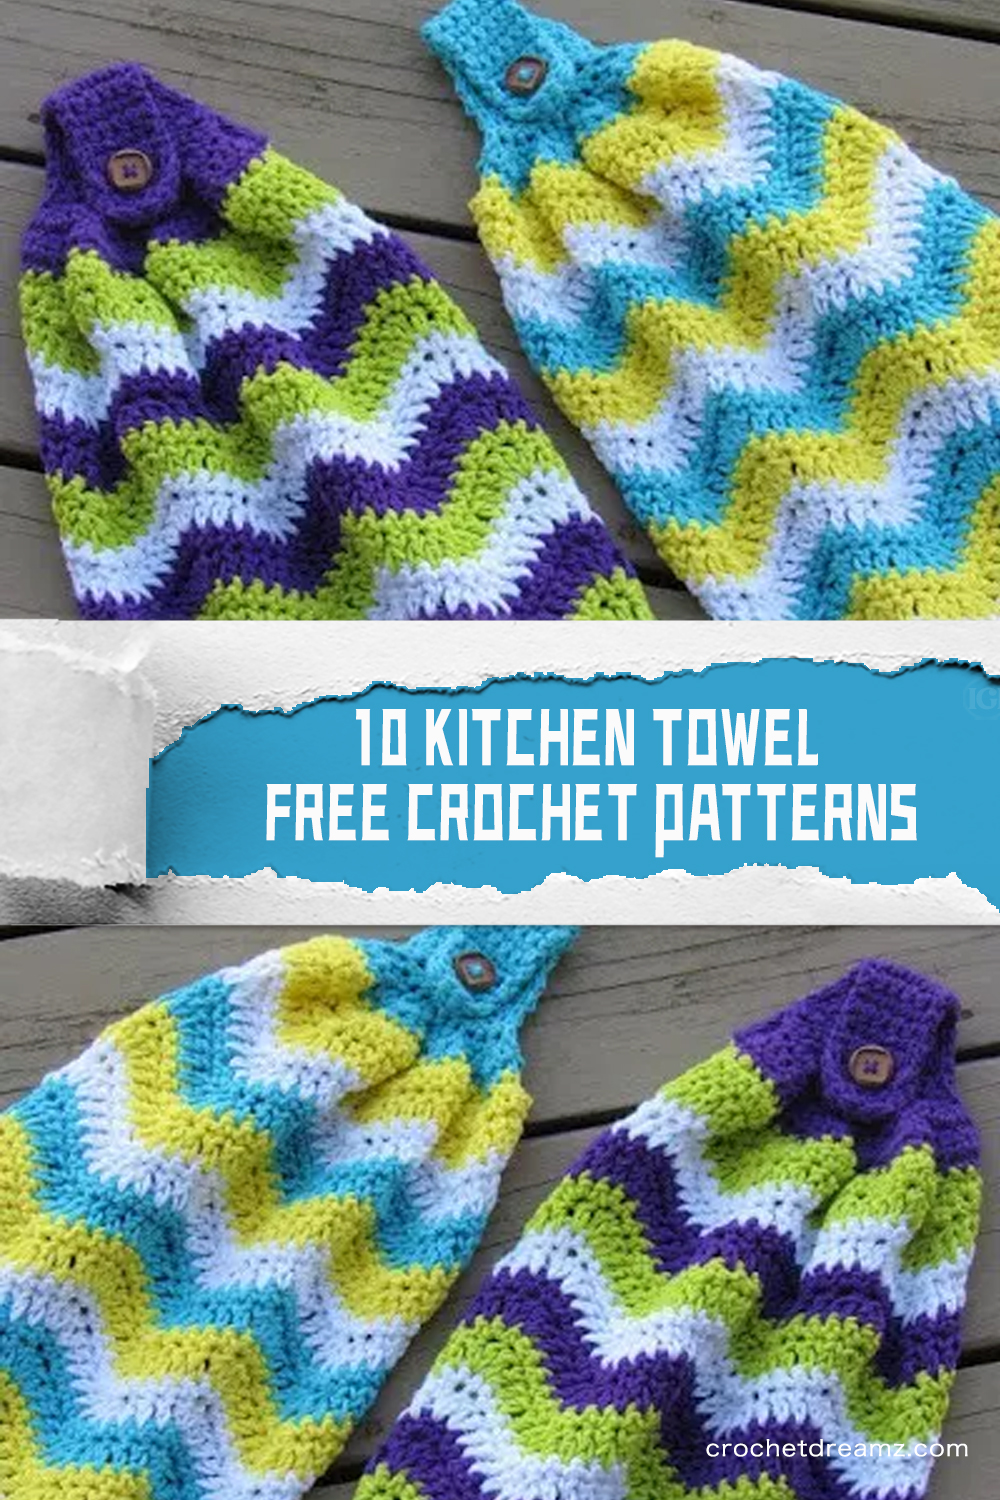 10 Crochet Kitchen Towel FREE Patterns